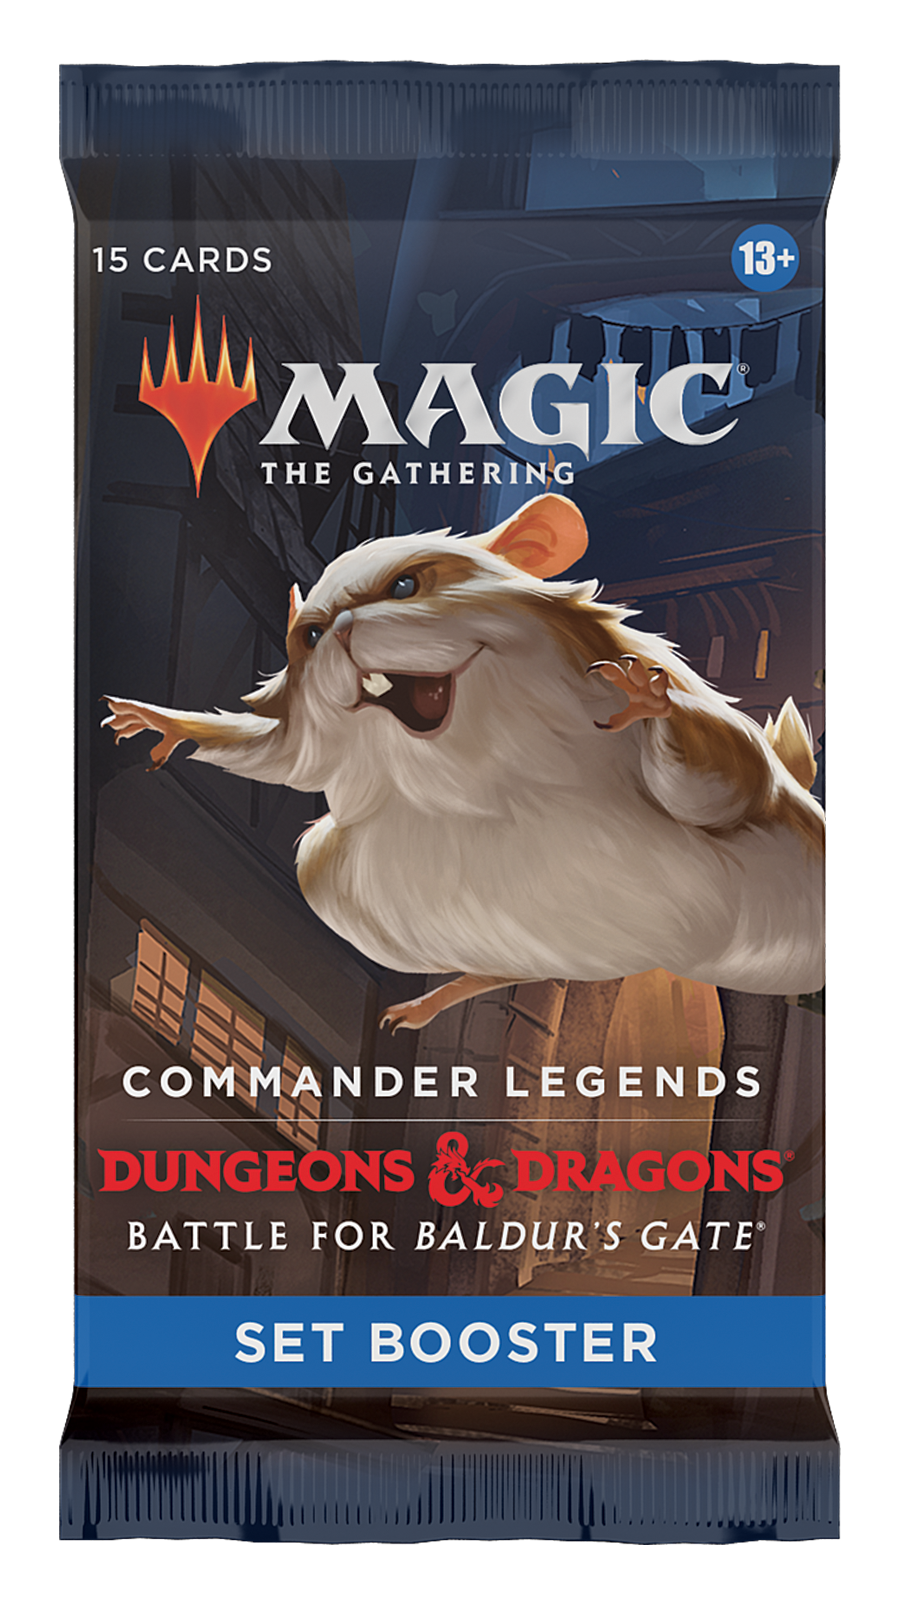 Wizards of the Coast Magic The Gathering - Commander Legends Battle for Baldur's Gate Set Booster